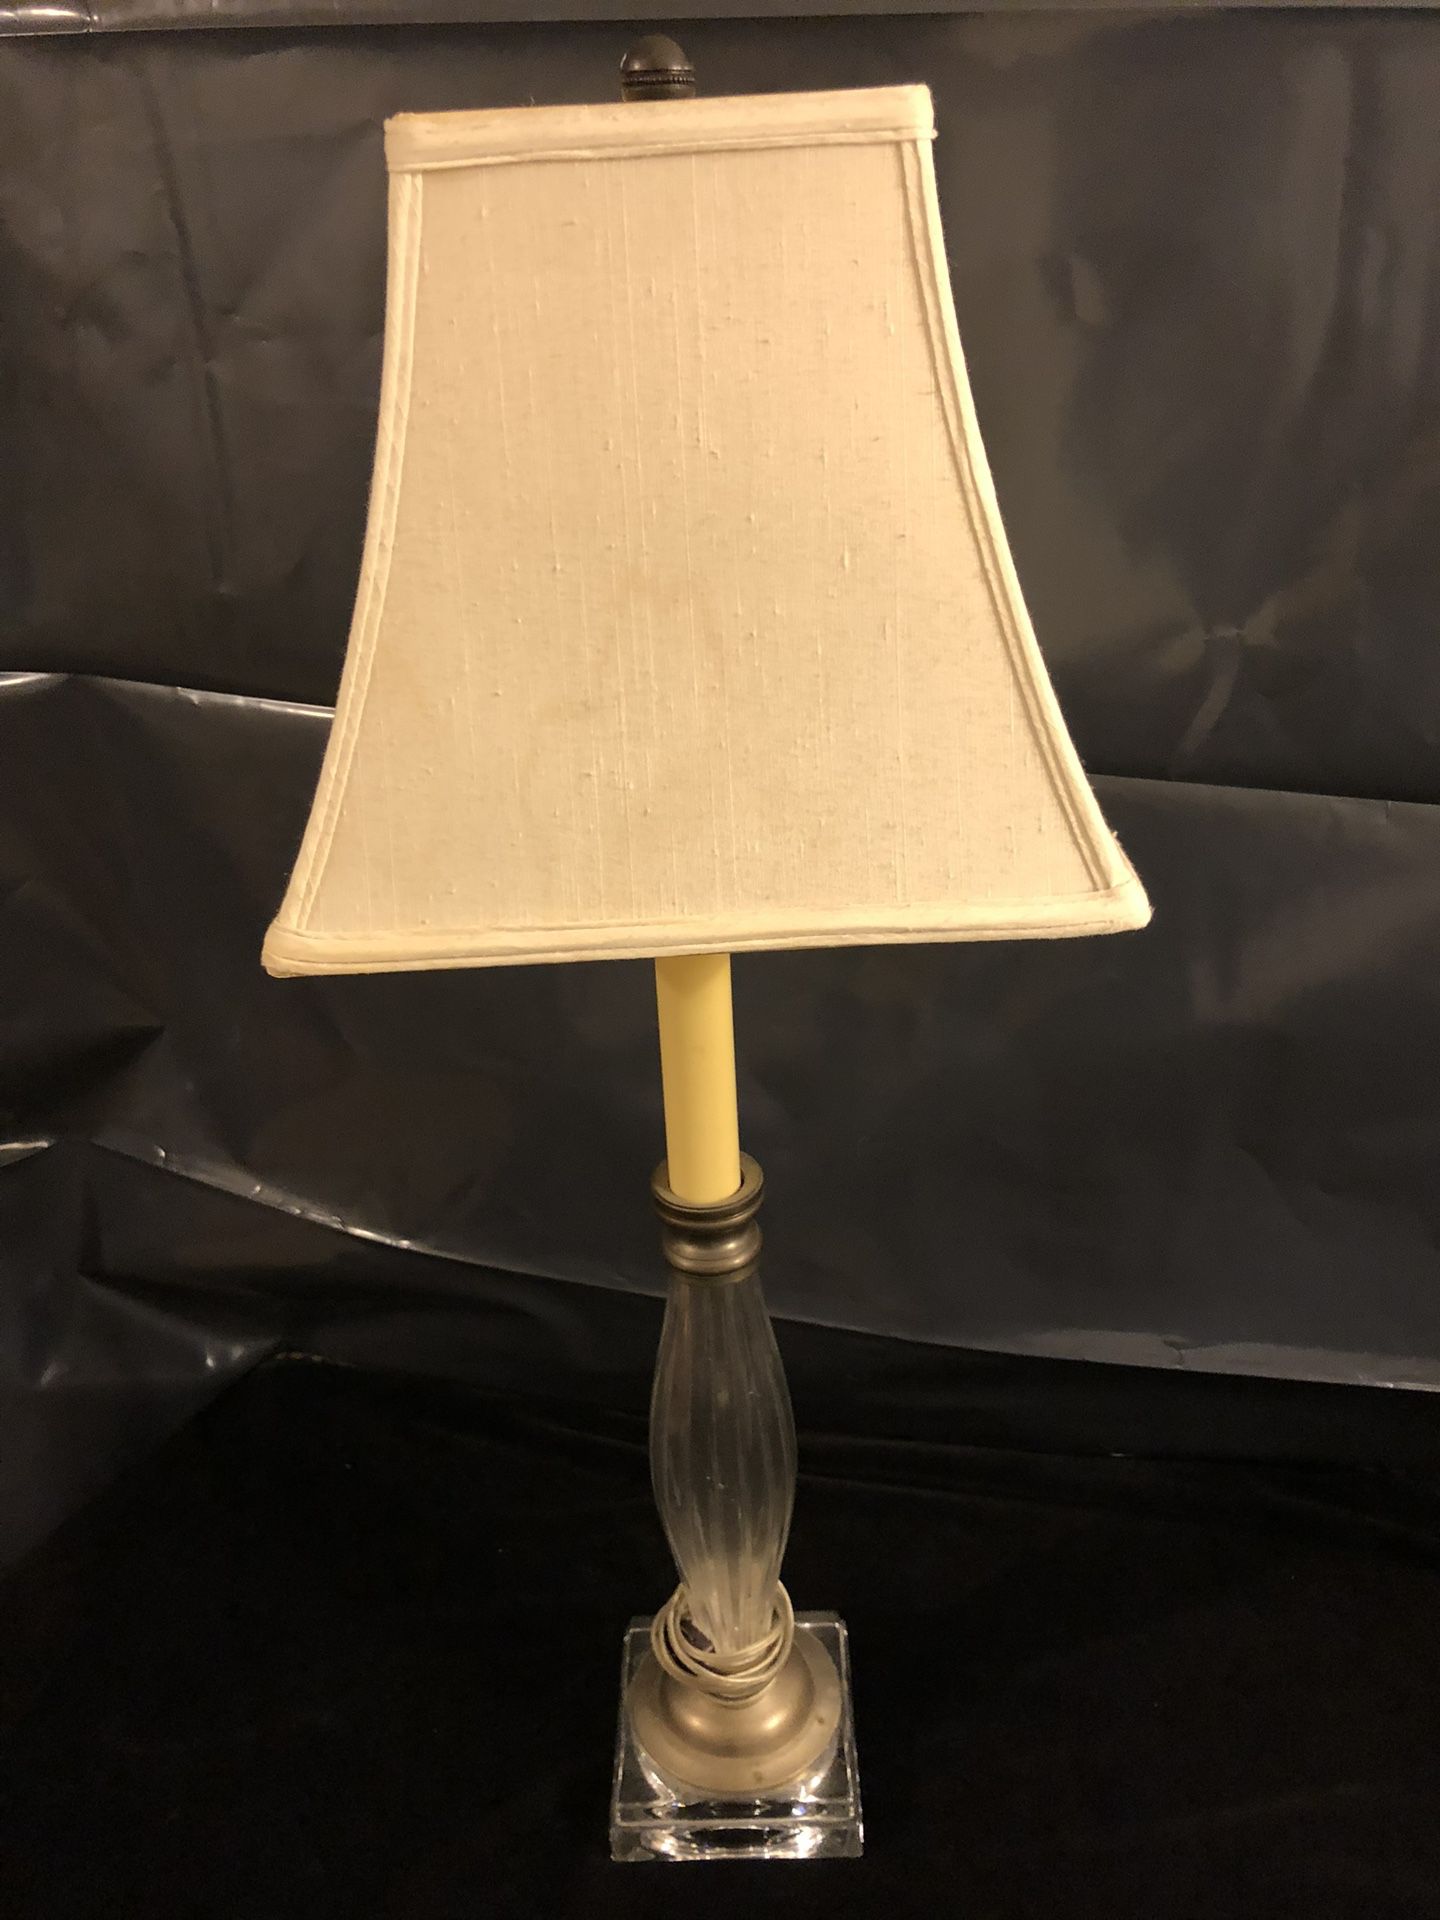 Candle Stick Lamp